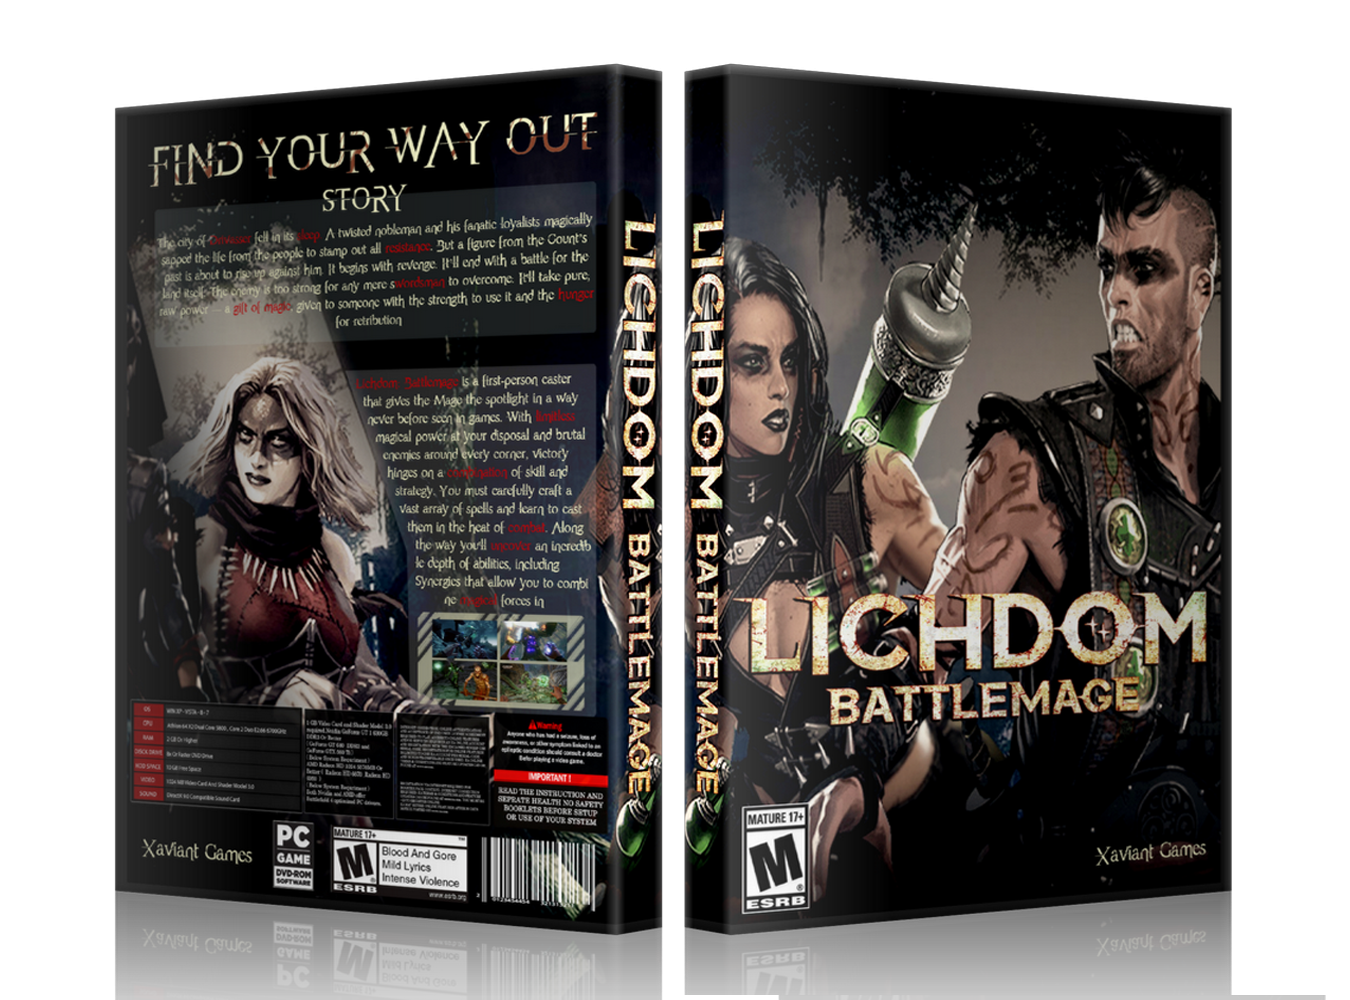 Lichdom: Battlemage box cover